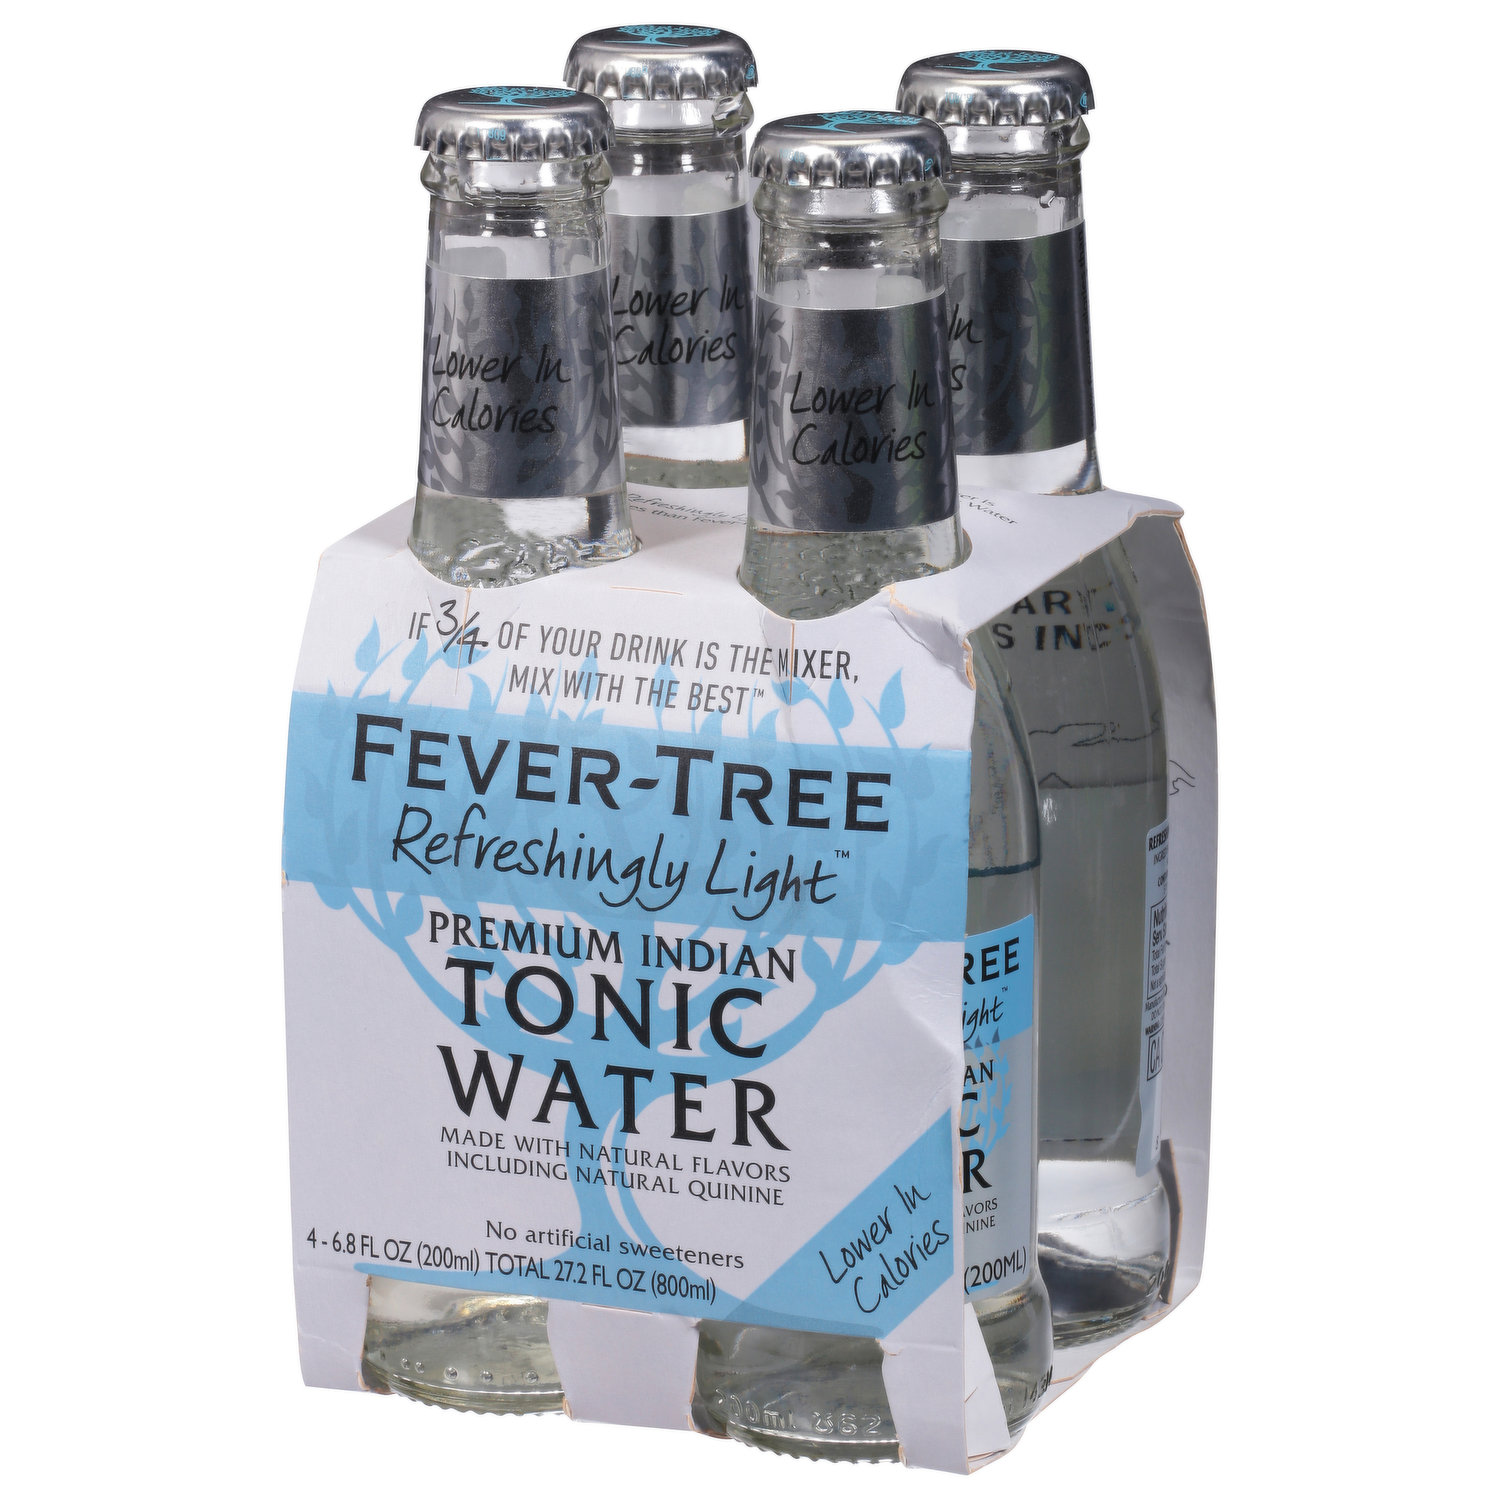 Fever-Tree Tonic Water, Indian, Premium - Brookshire's